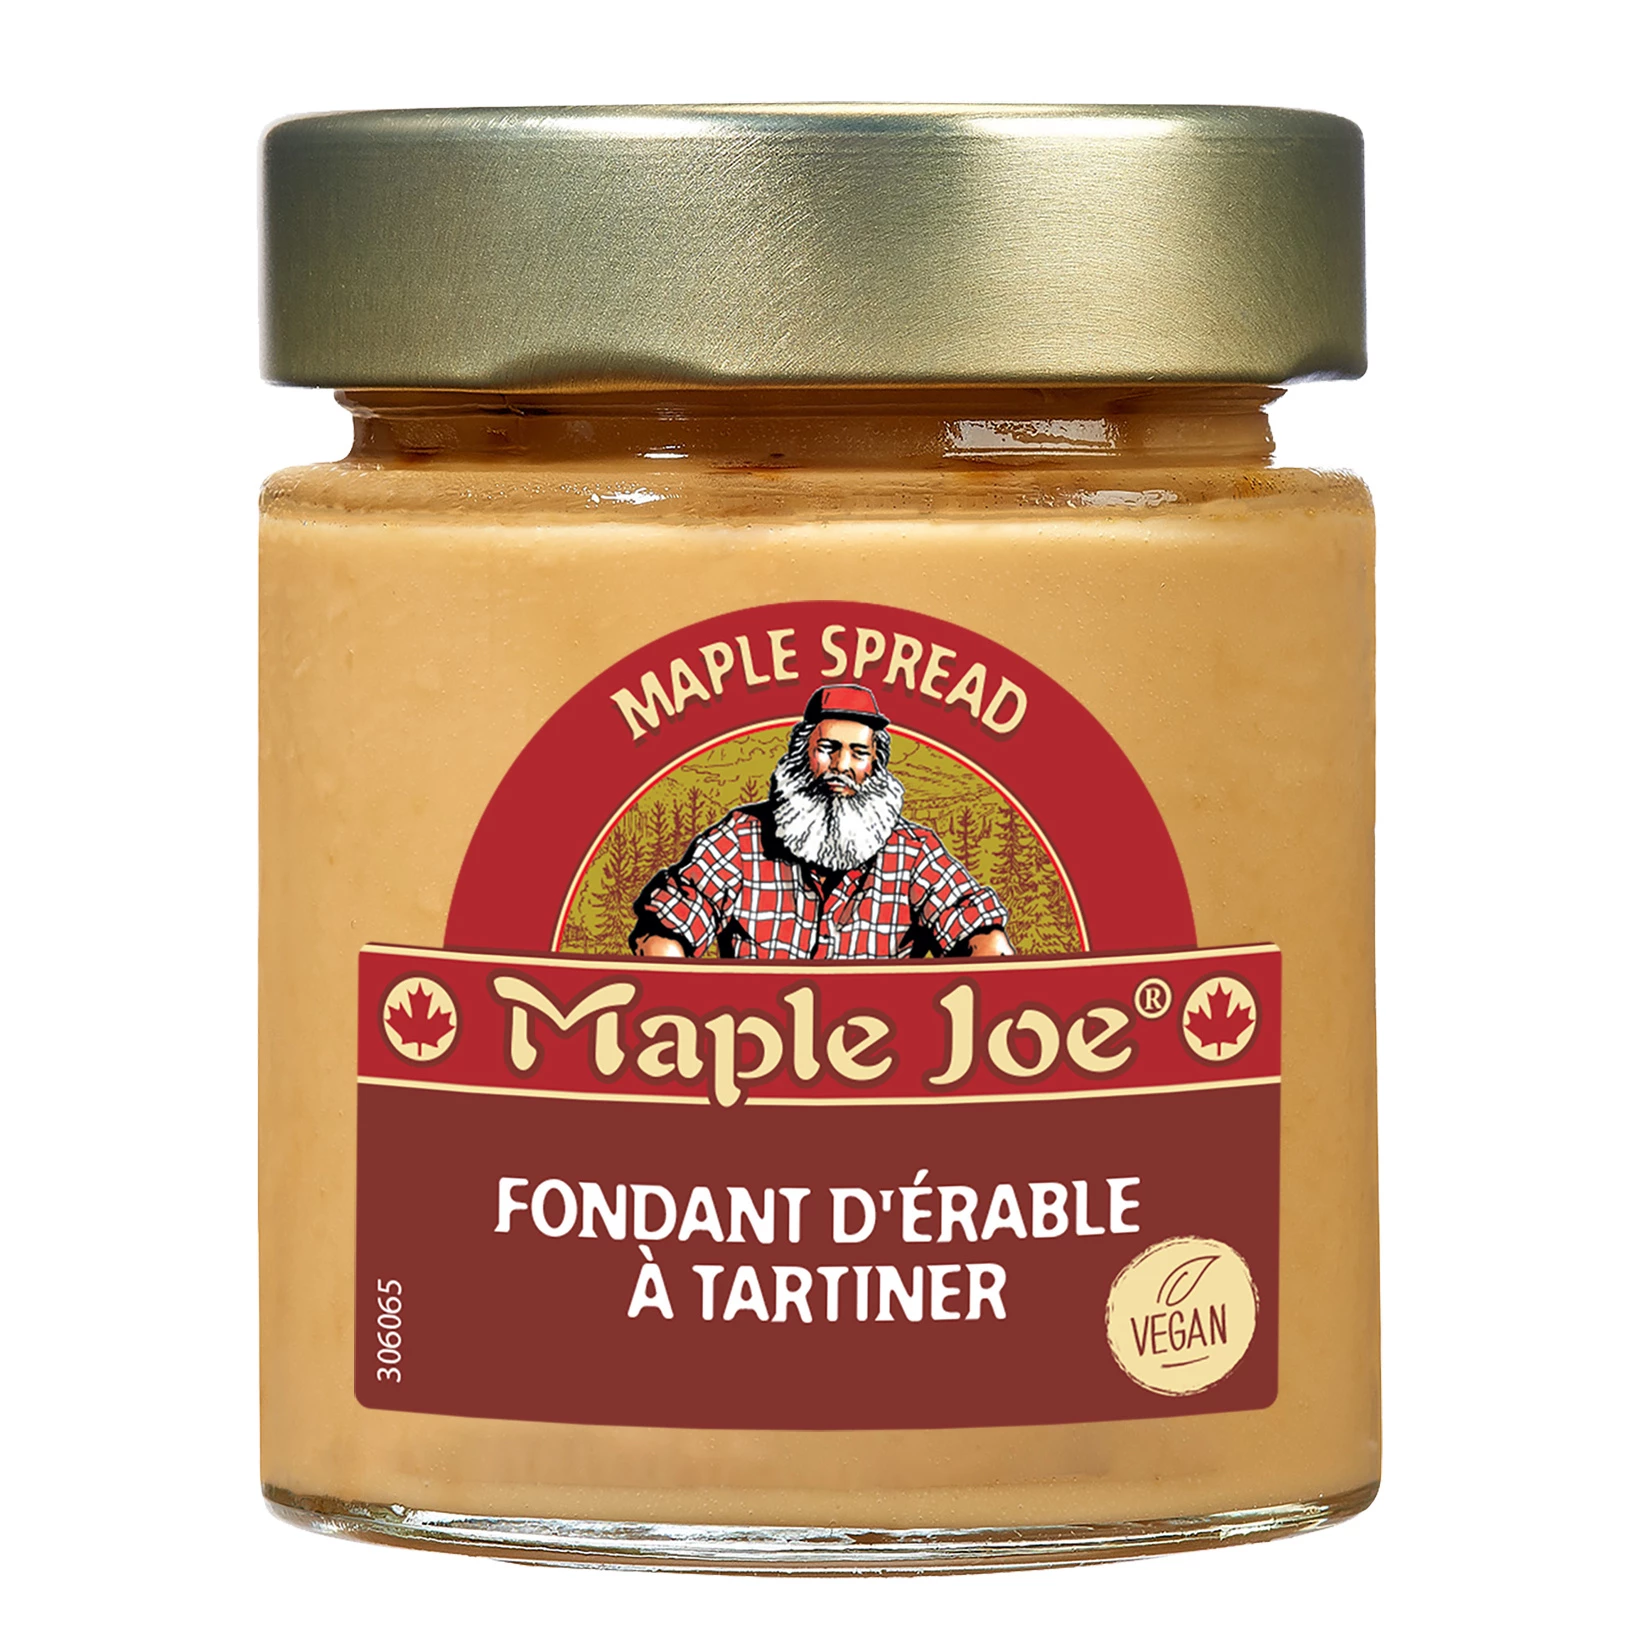 Melting Creamy Maple Syrup to Spread 200g - MAPLE JOE